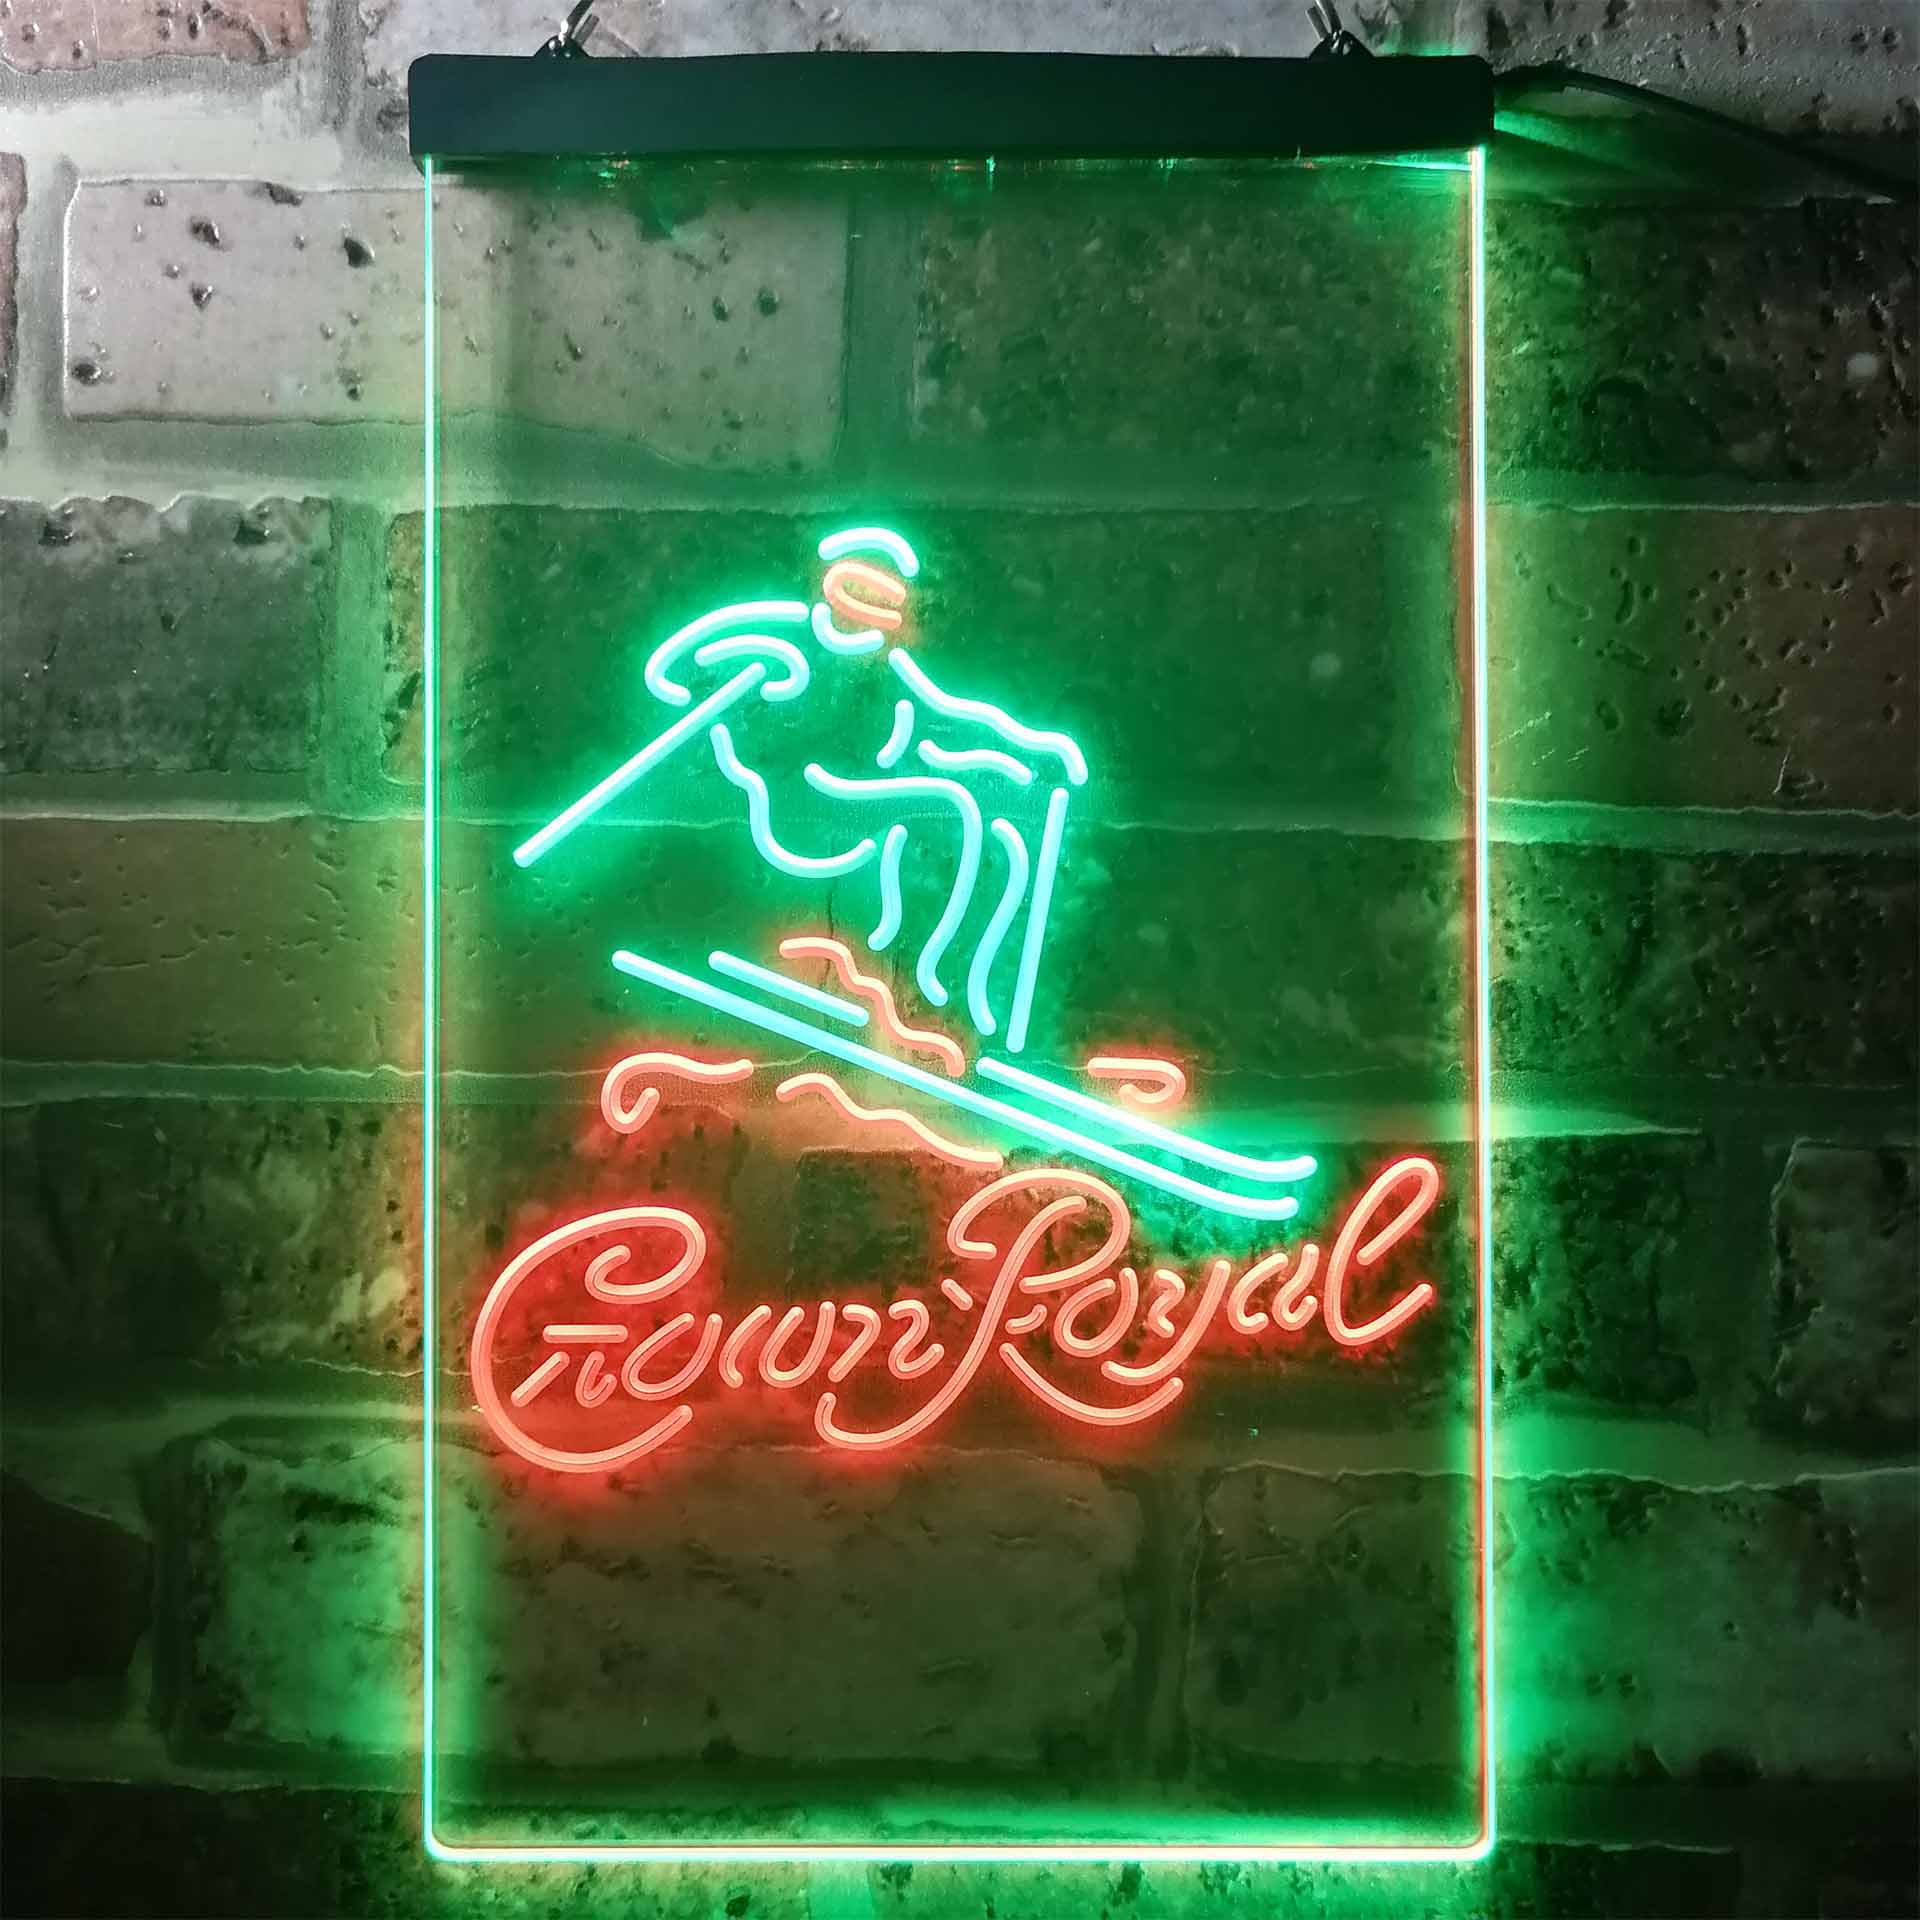 Crown Royal Ice Skiing Neon LED Sign